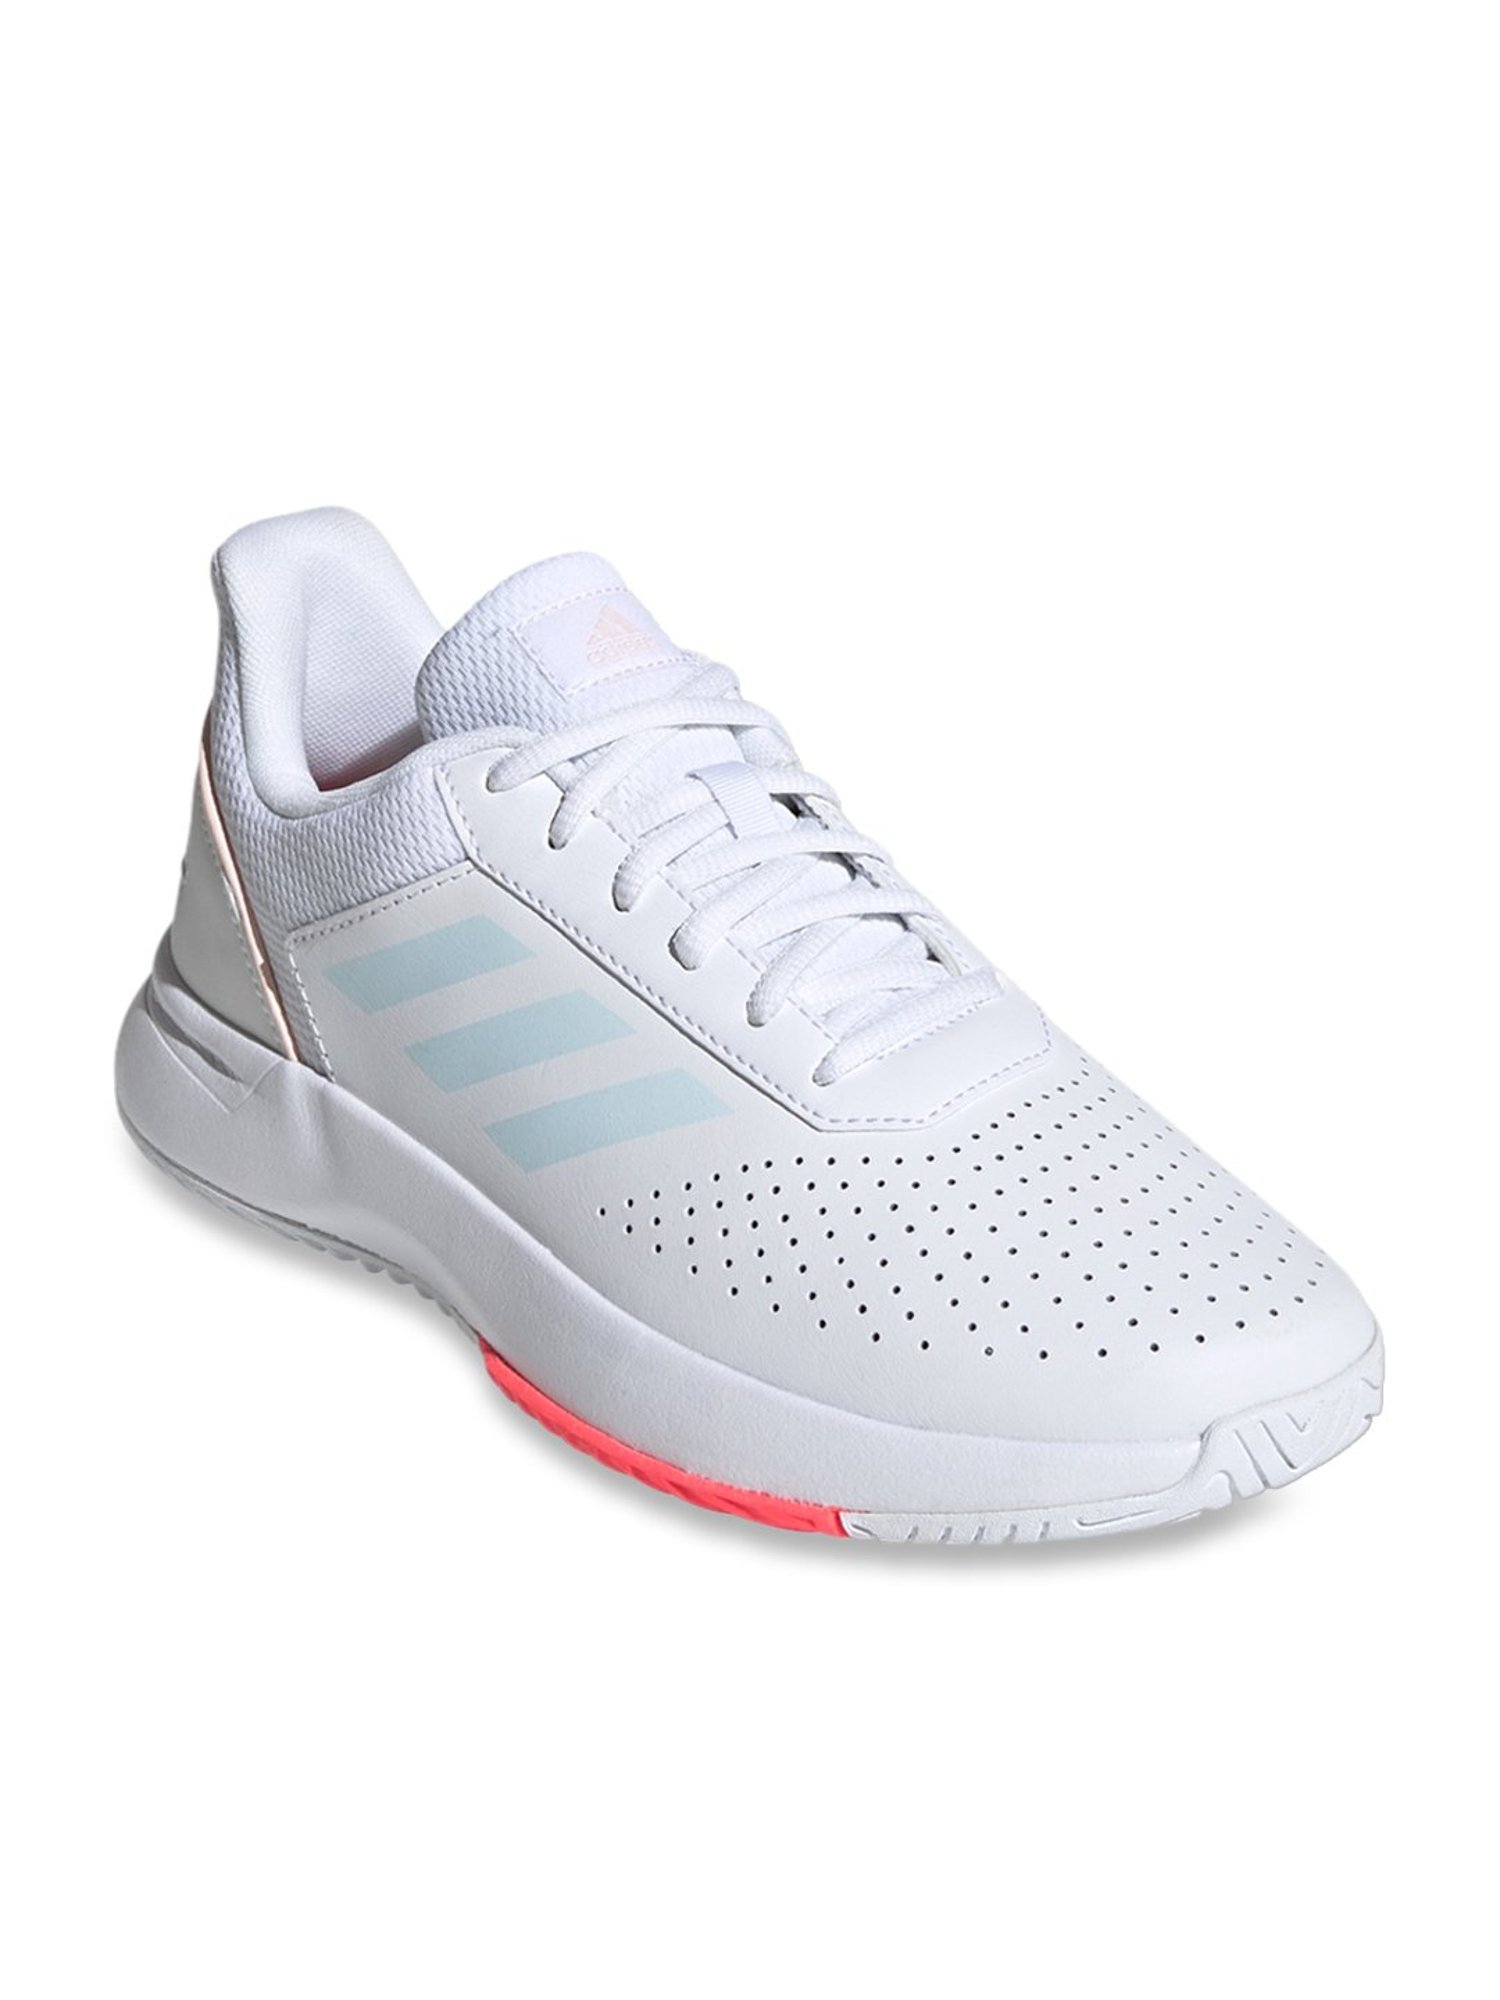 lightweight white tennis shoes